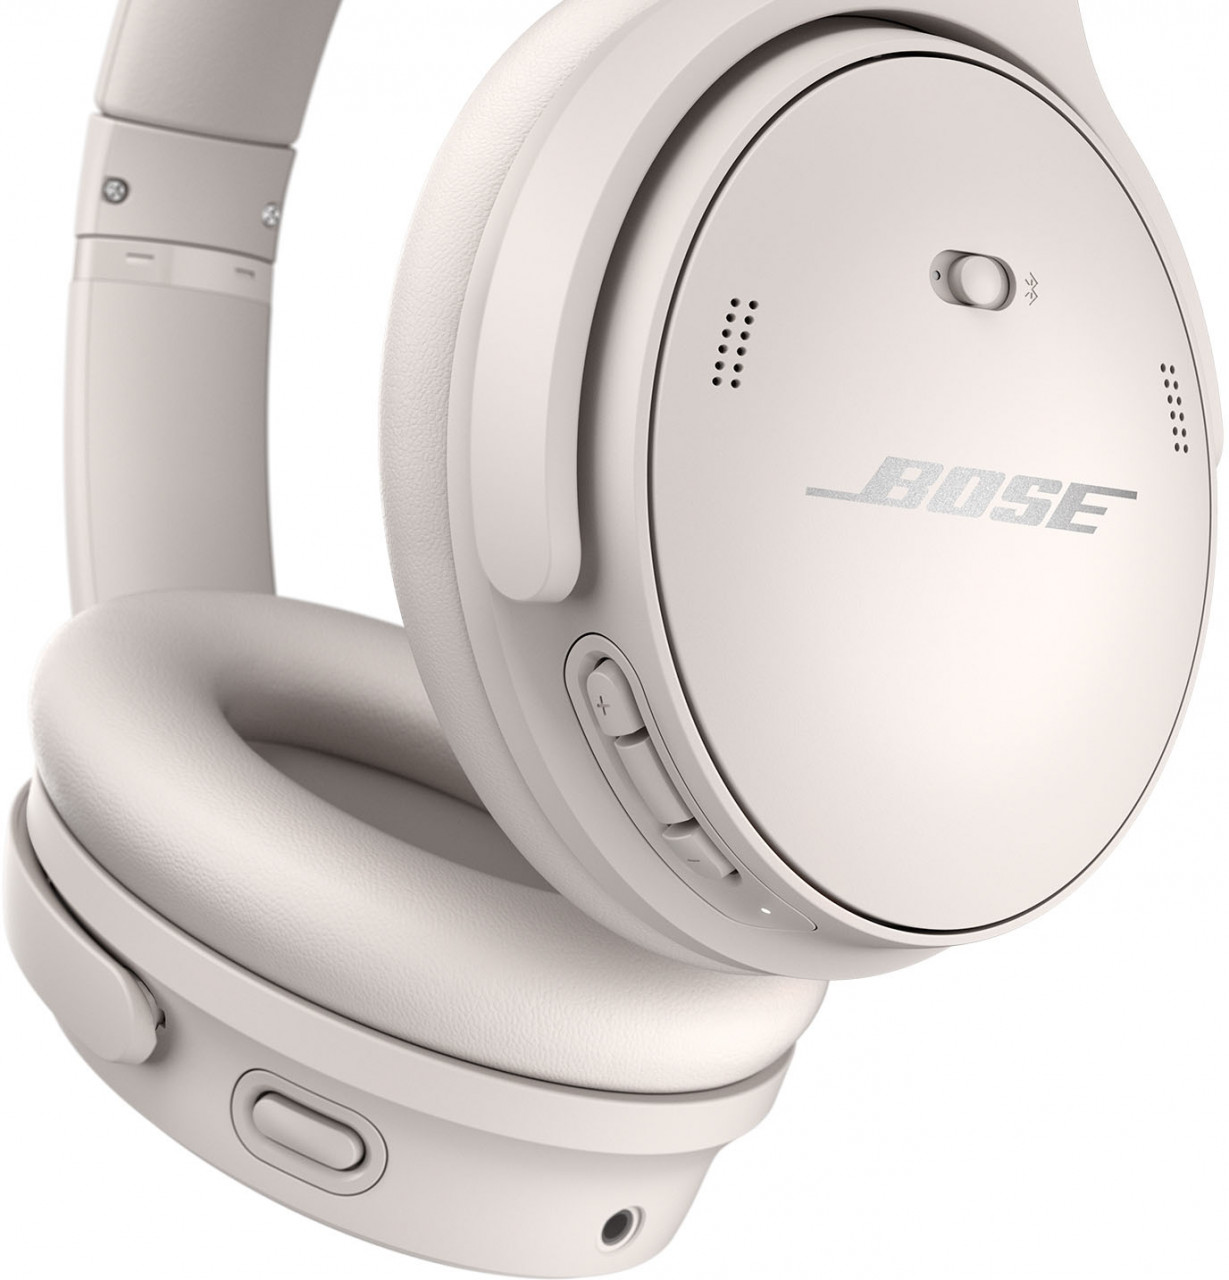 Bose Headphone